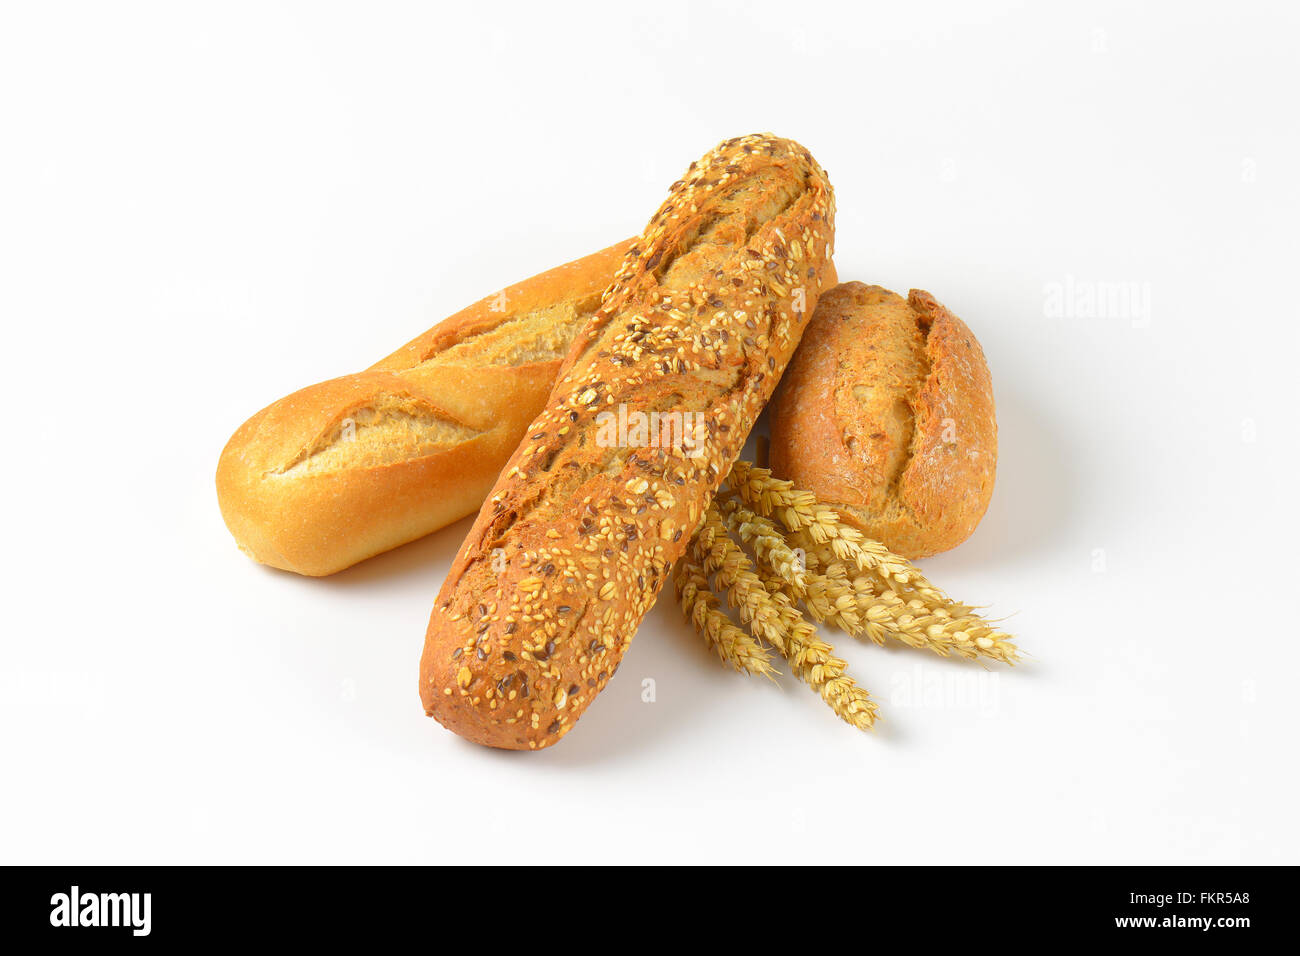 freshly baked bread rolls on white background Stock Photo